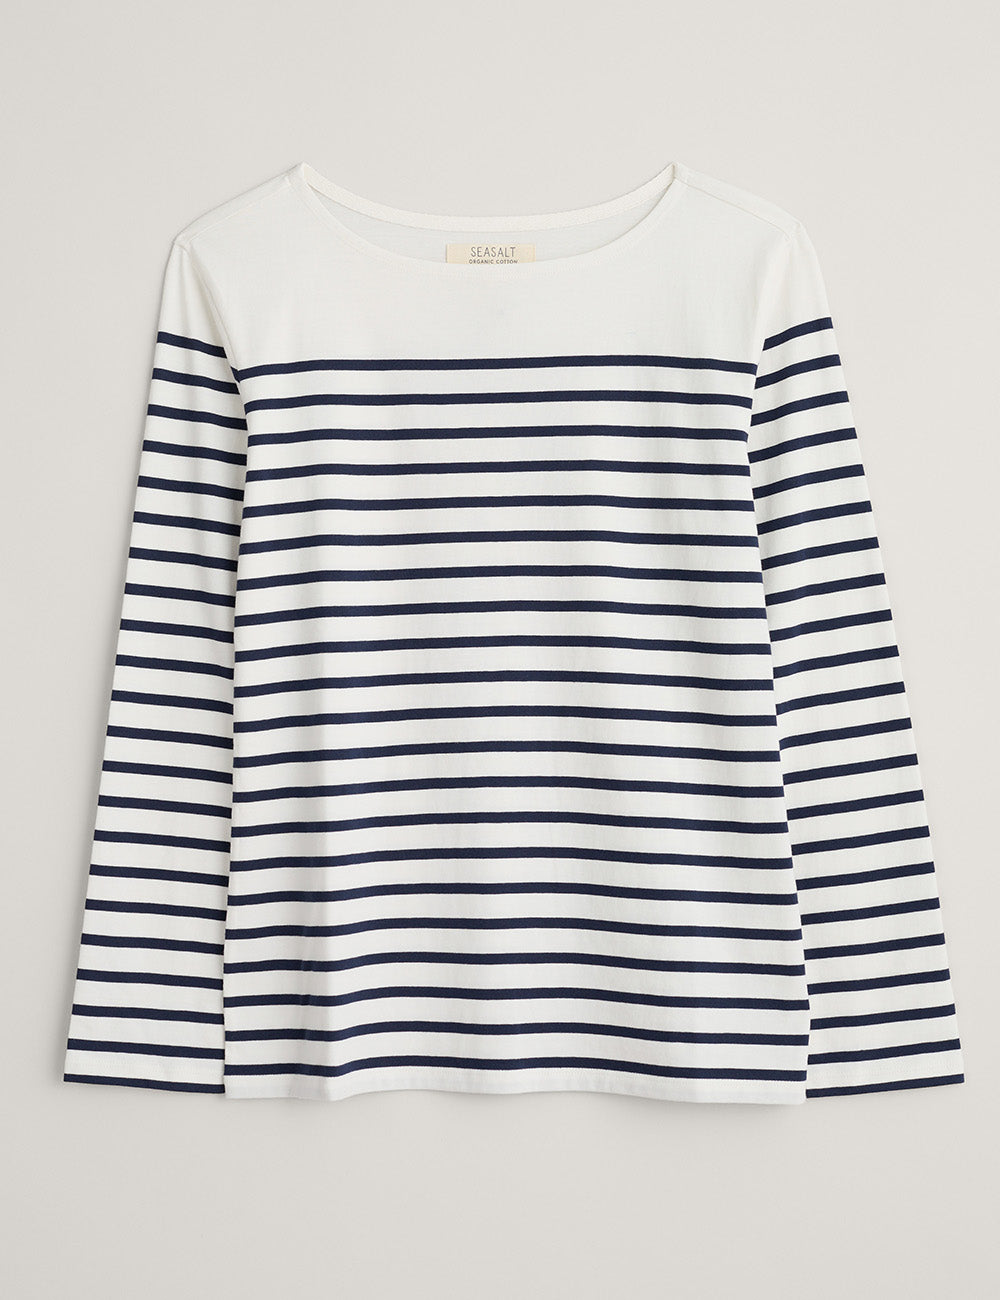 Seasalt Sailor Shirt - Falmouth Breton Chalk Maritime